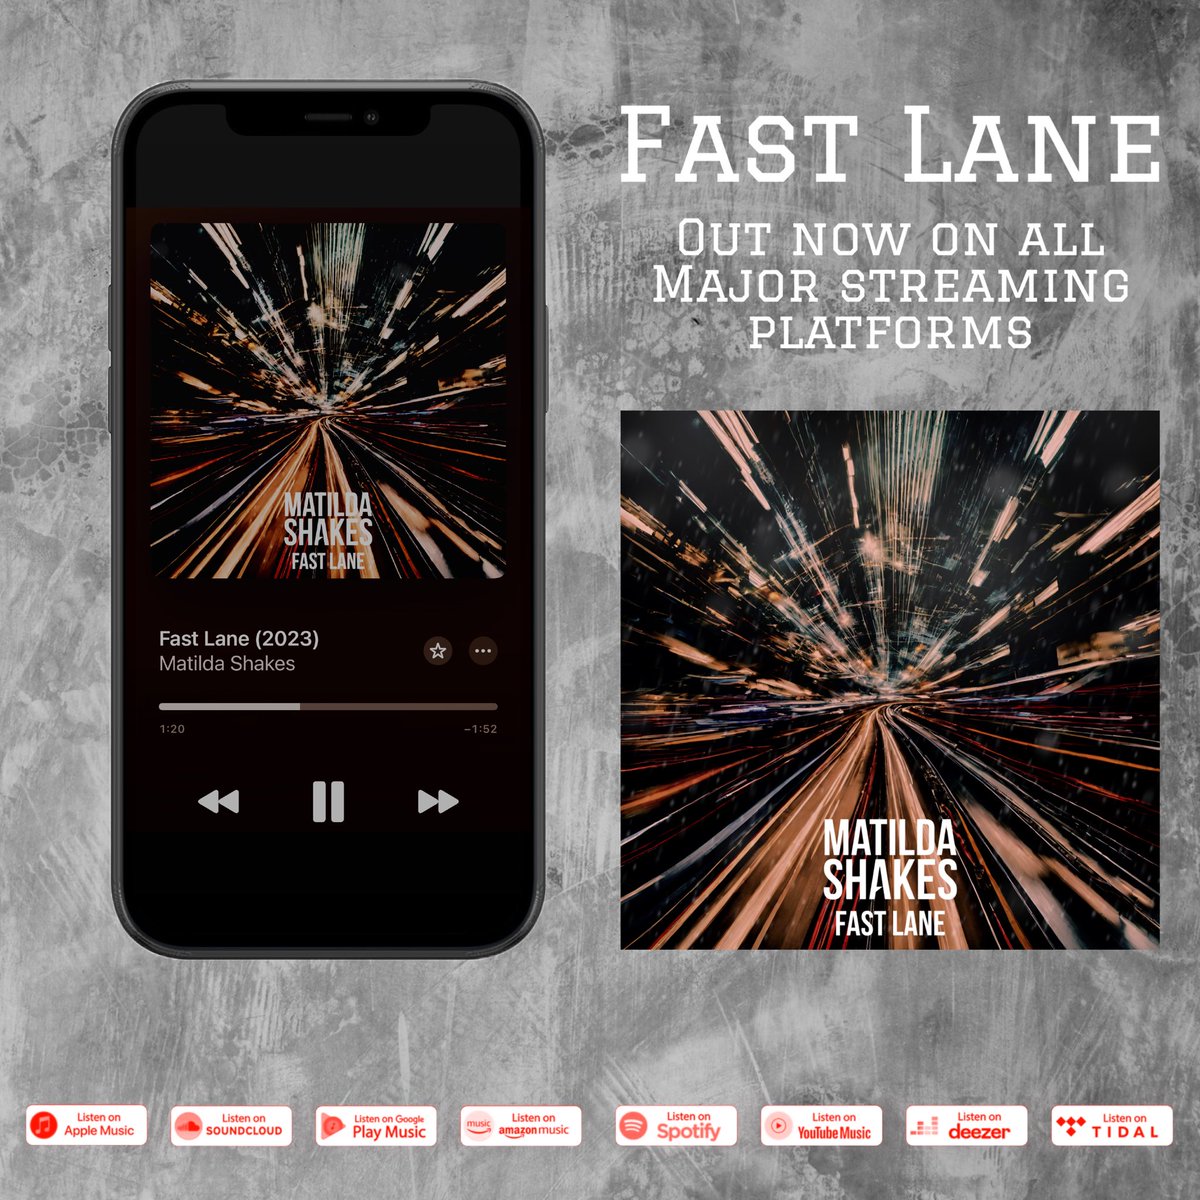 She’s back! Go stream ‘Fast Lane’ now on all Major streaming platforms 🏎️ open.spotify.com/track/4ld93wkI…